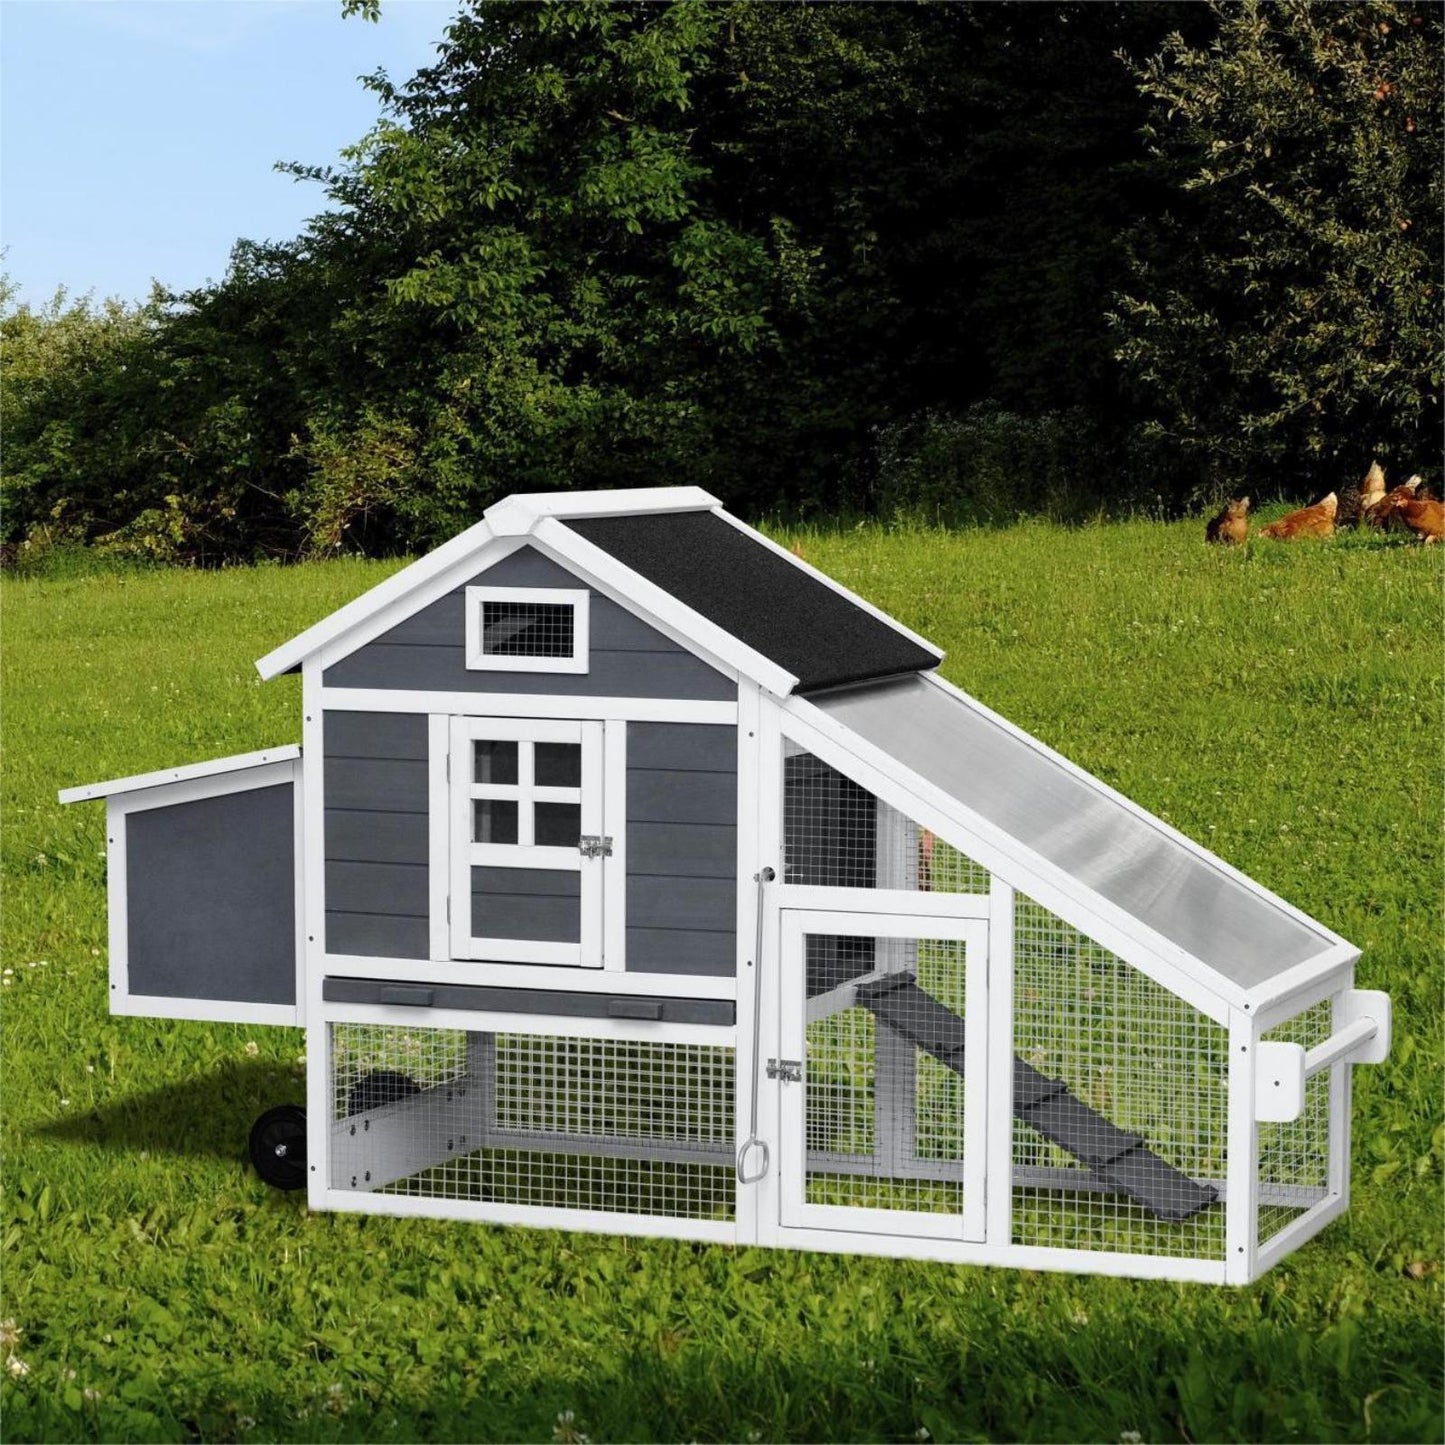 Algherohein Chicken Wire Wood Chicken Coop Rabbit Hutch Kennels House,Outdoor Large Animal Home,Gray